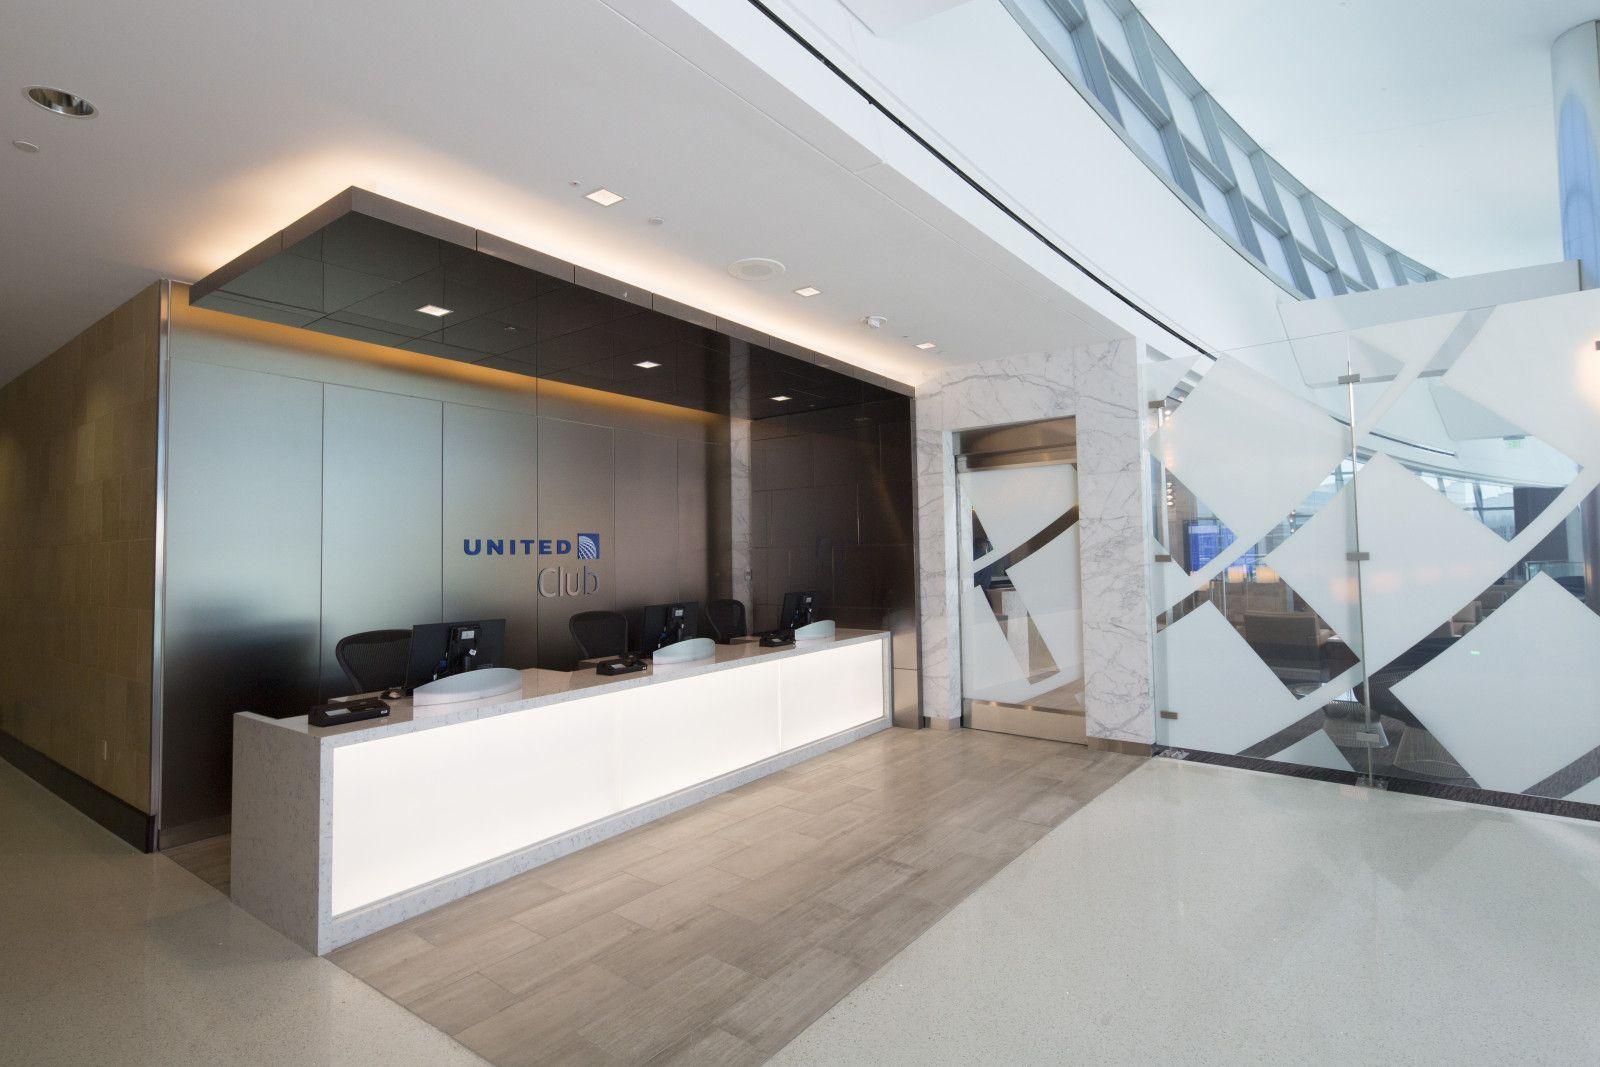 United Airlines Club Logo - LogoDix